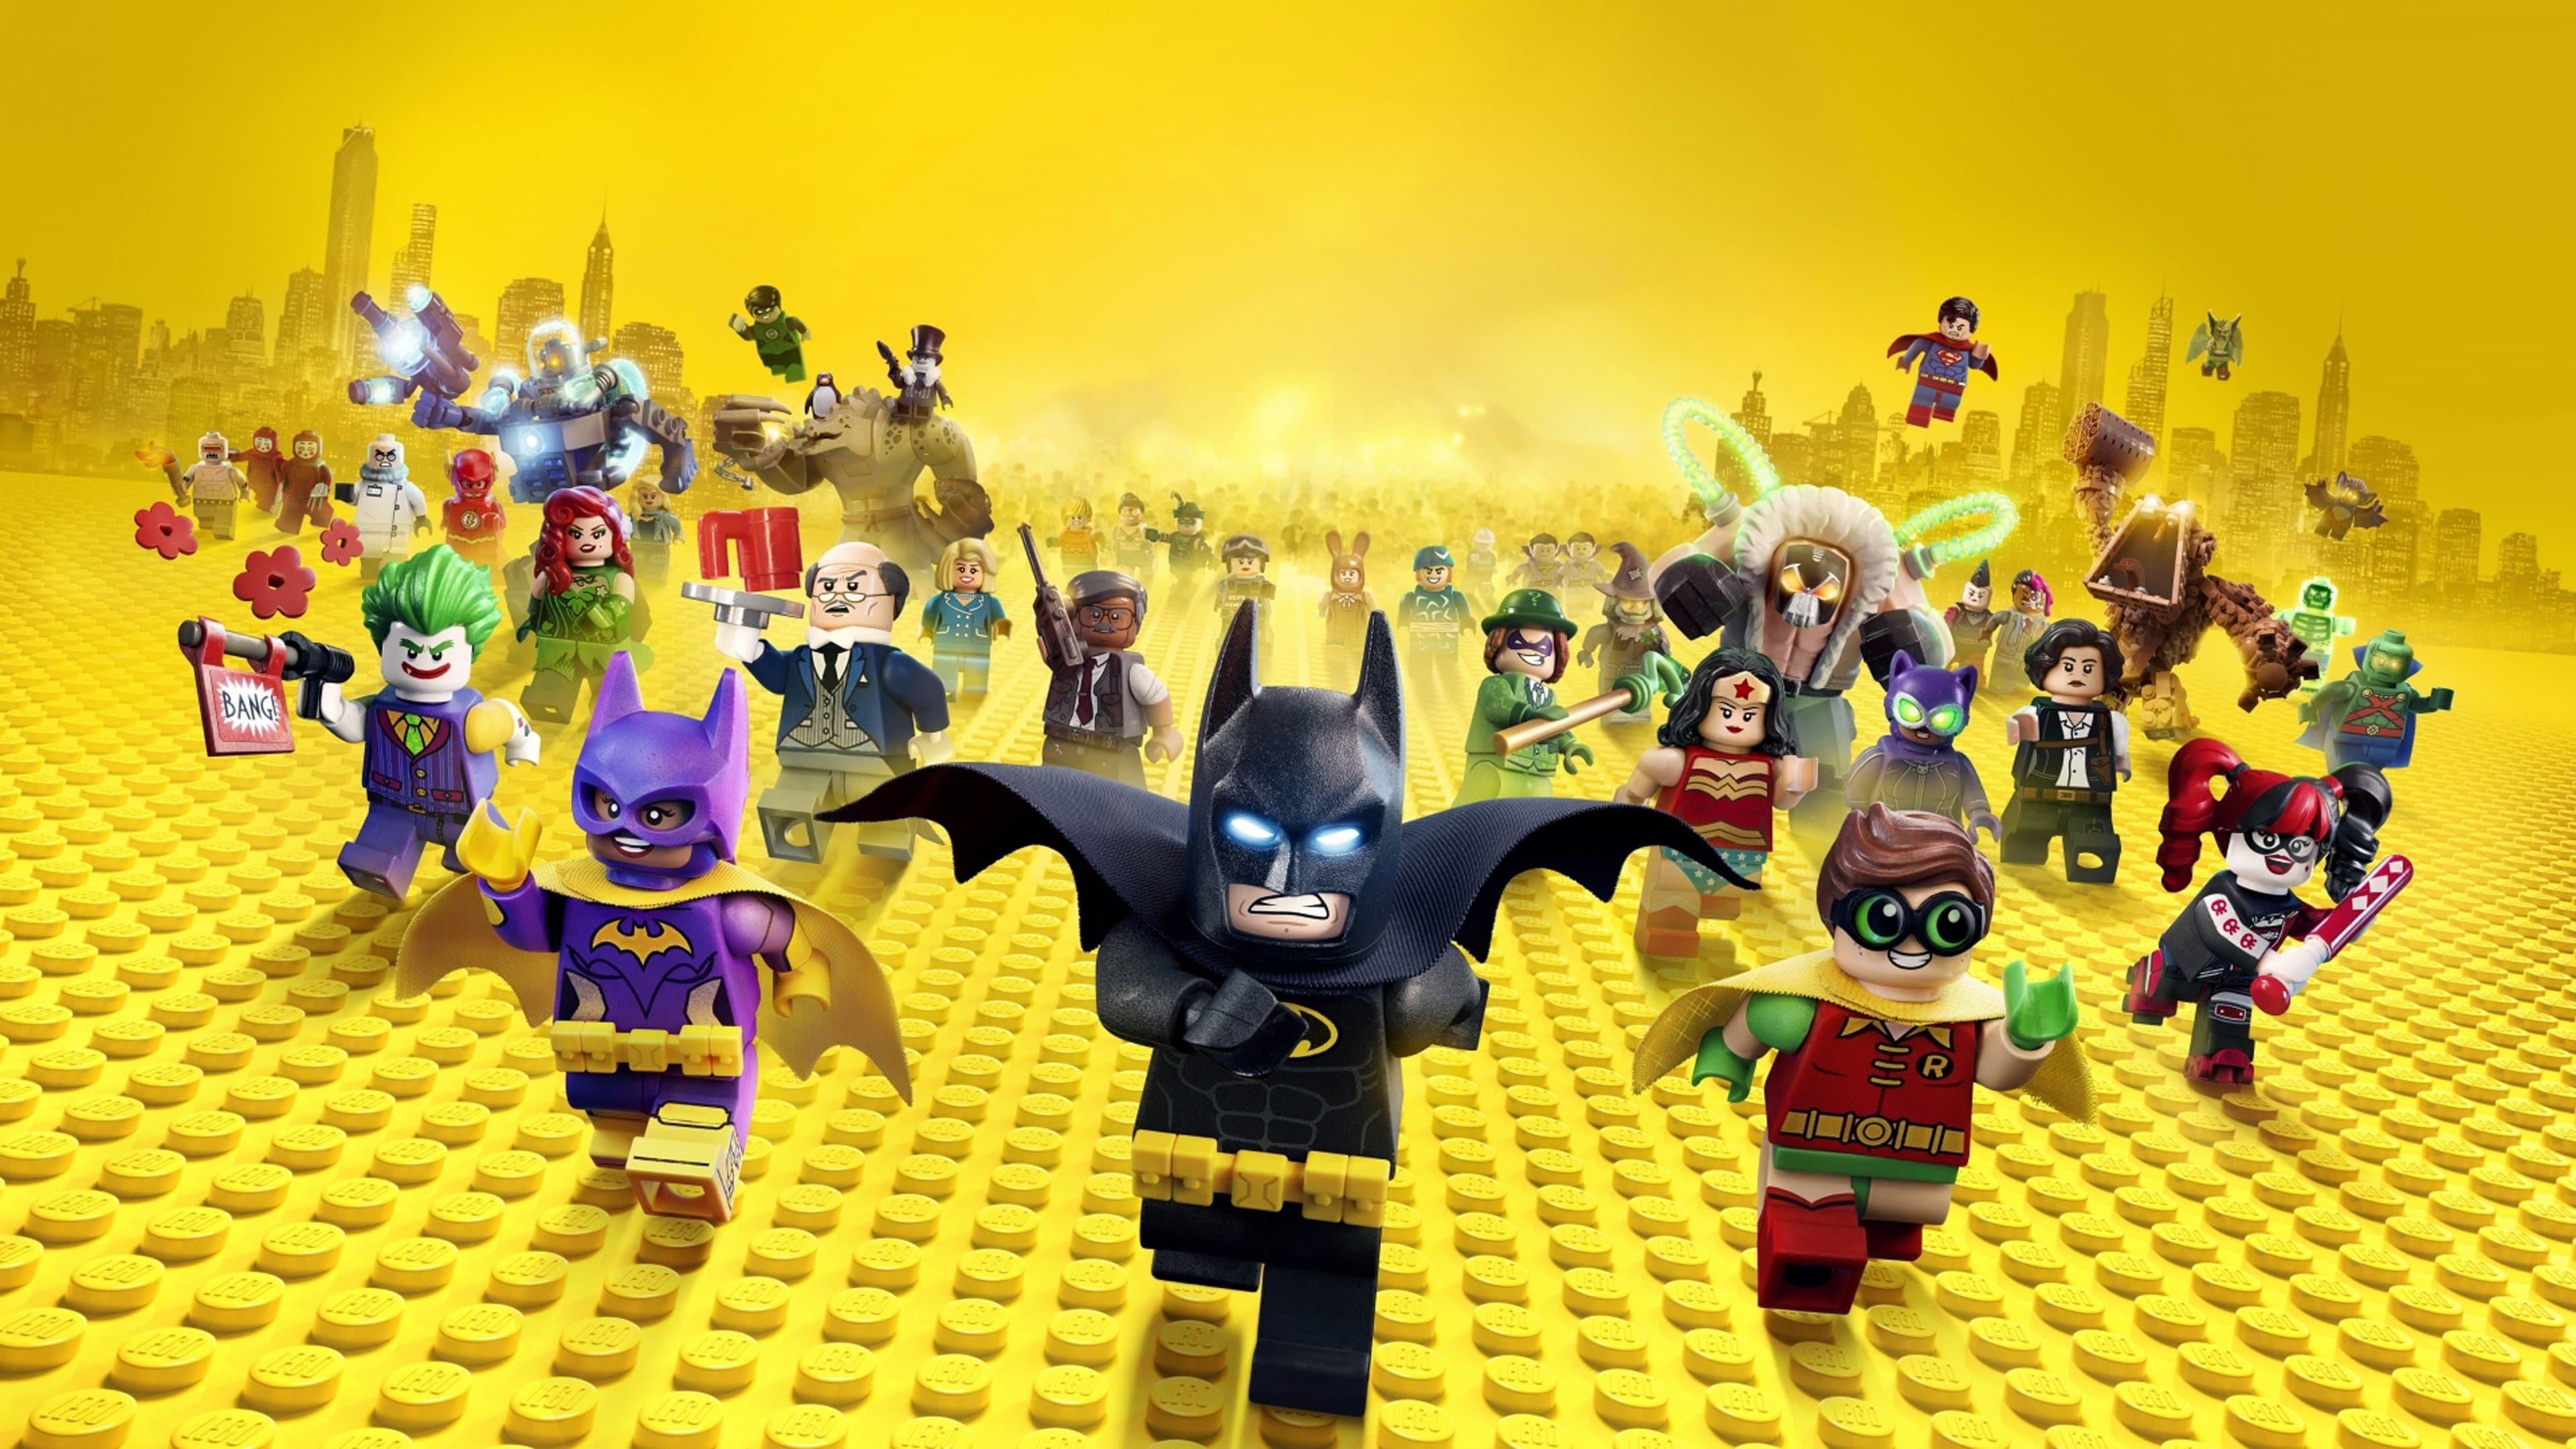 Poster Phim Câu Chuyện Lego Batman (The Lego Batman Movie)